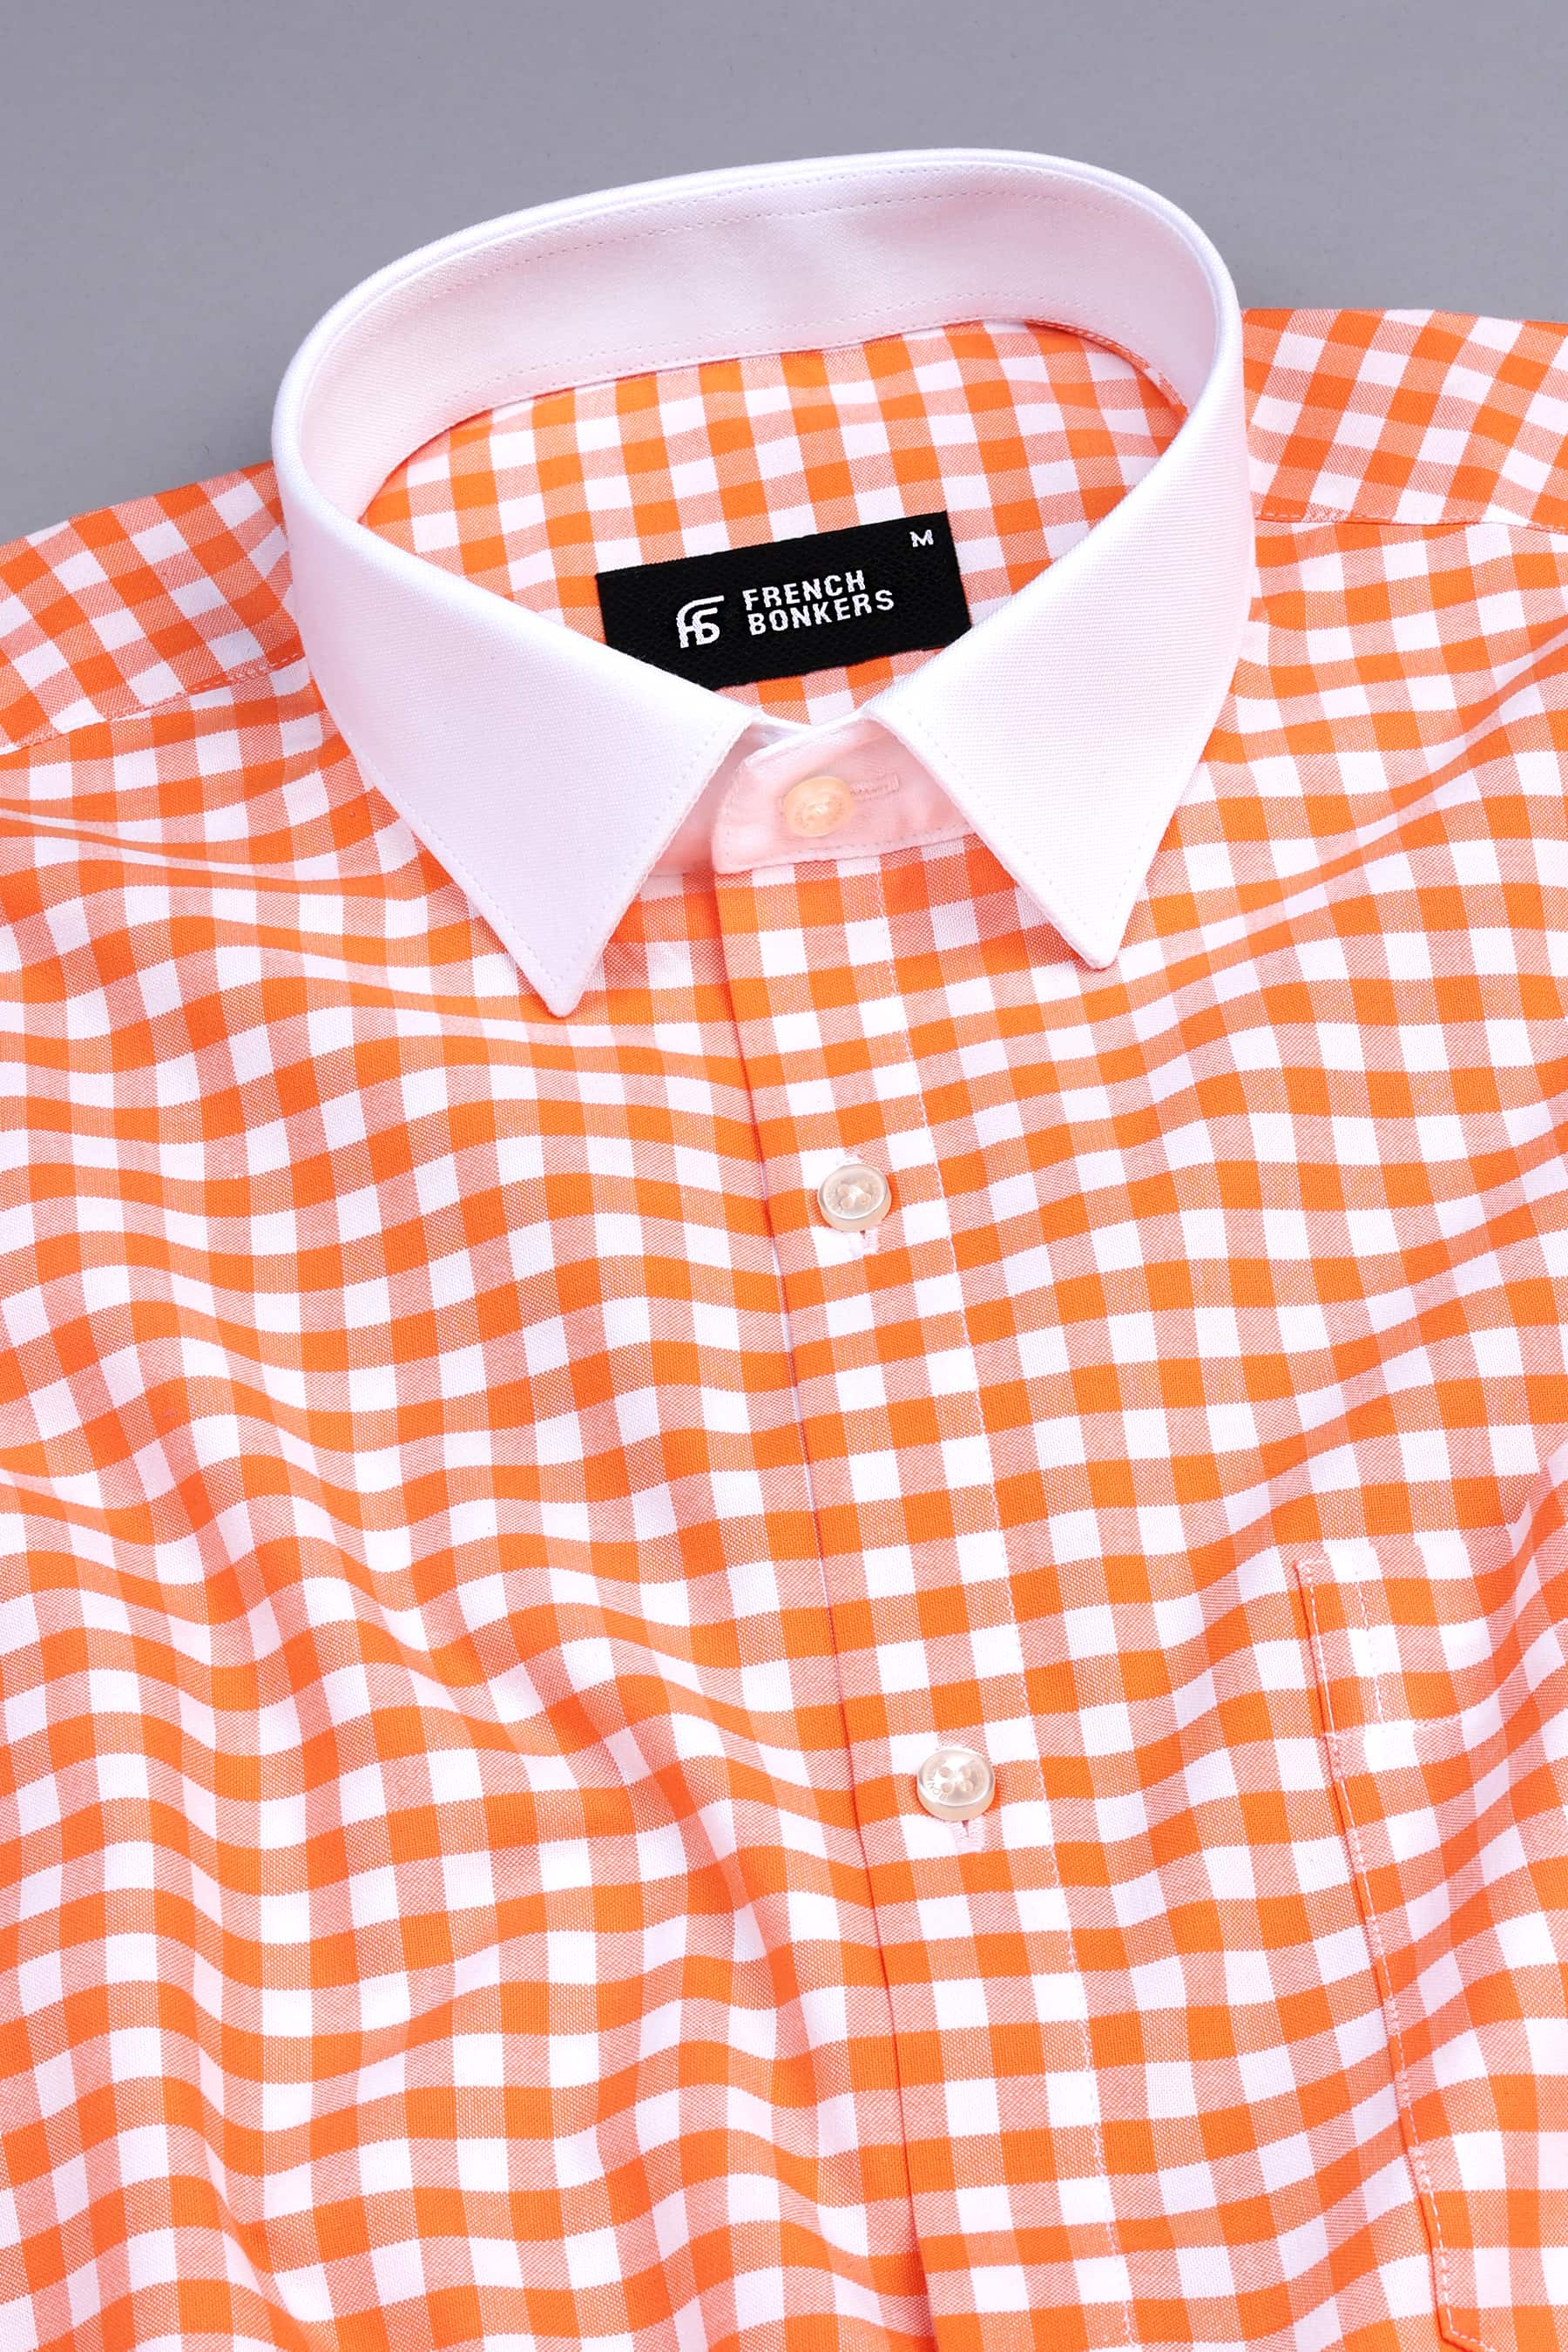 Pumpkin orange with white oxford gingham check shirt